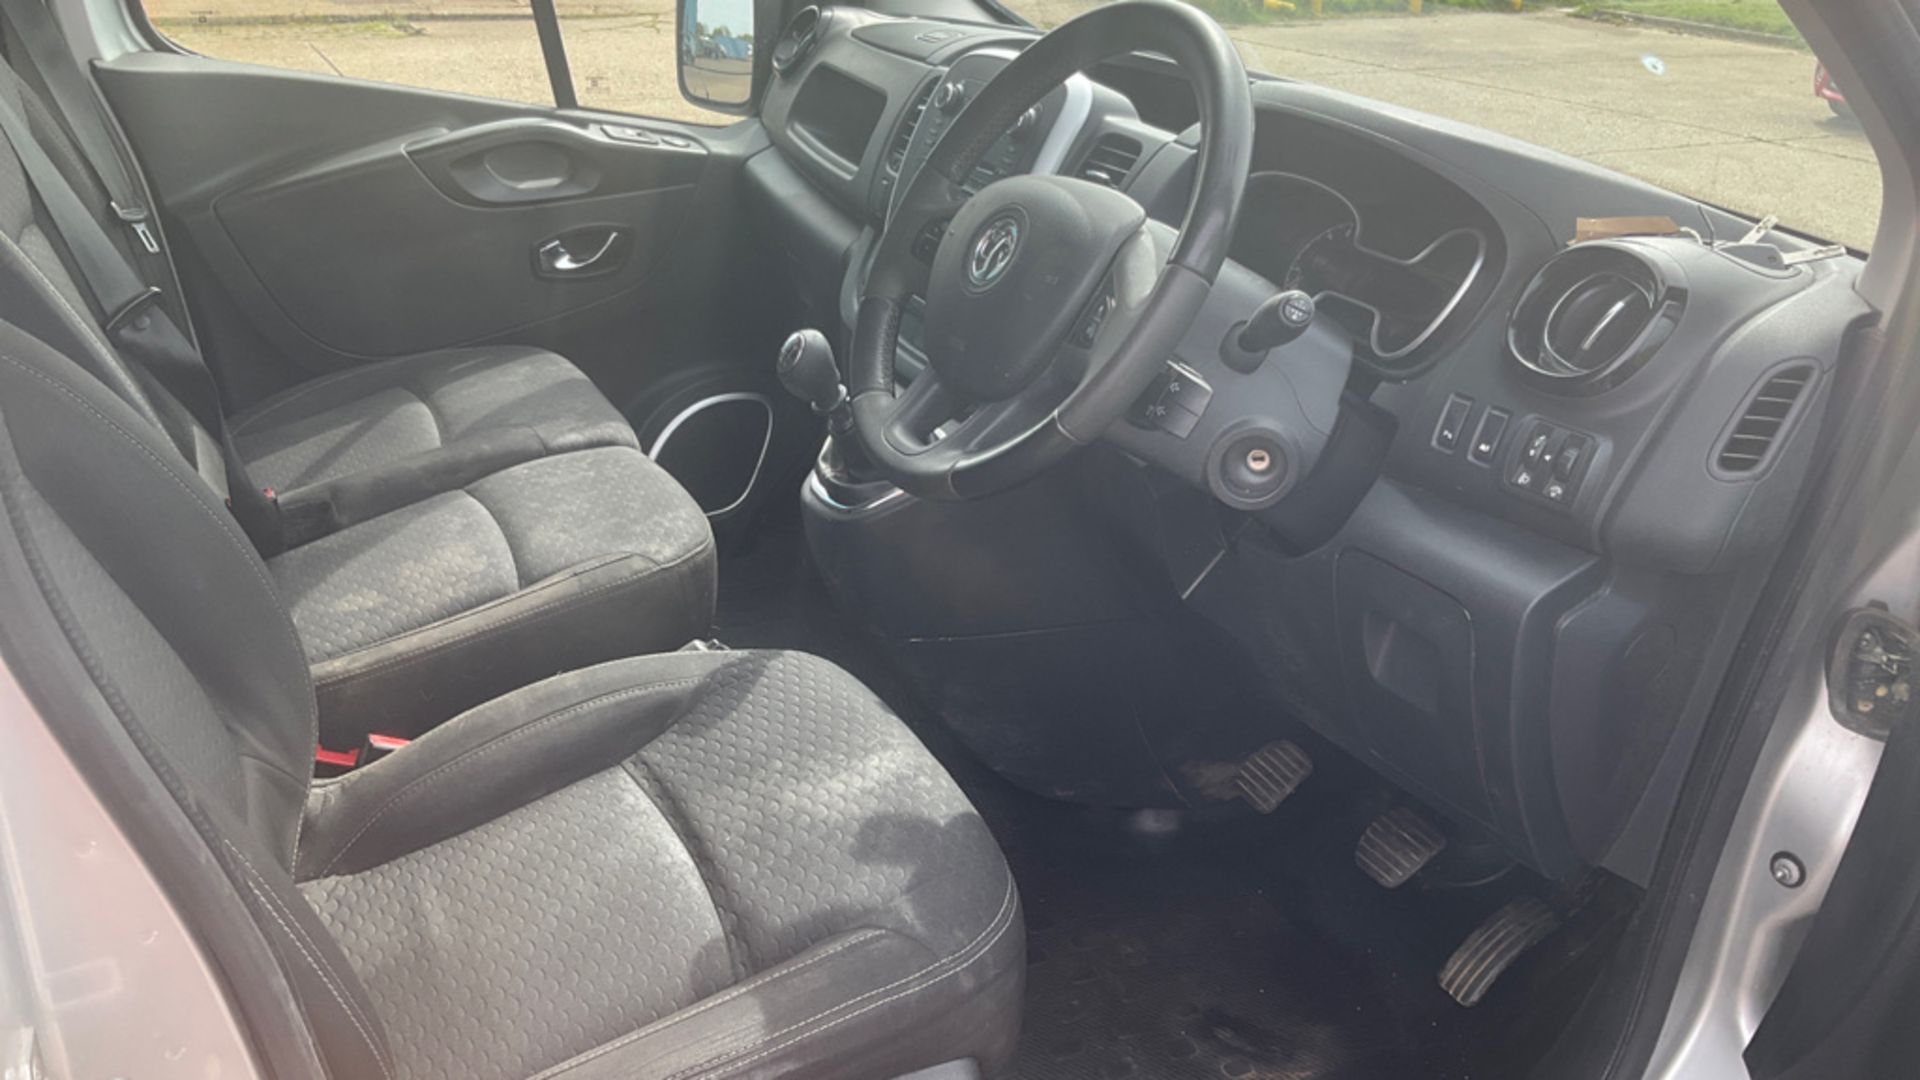 Vauxhall Vivaro 1.6 CDTI 115 Sportive L1 H1 CrewVan 2015 '15 Reg' A/C - 6 Seats - No Vat - Image 7 of 9